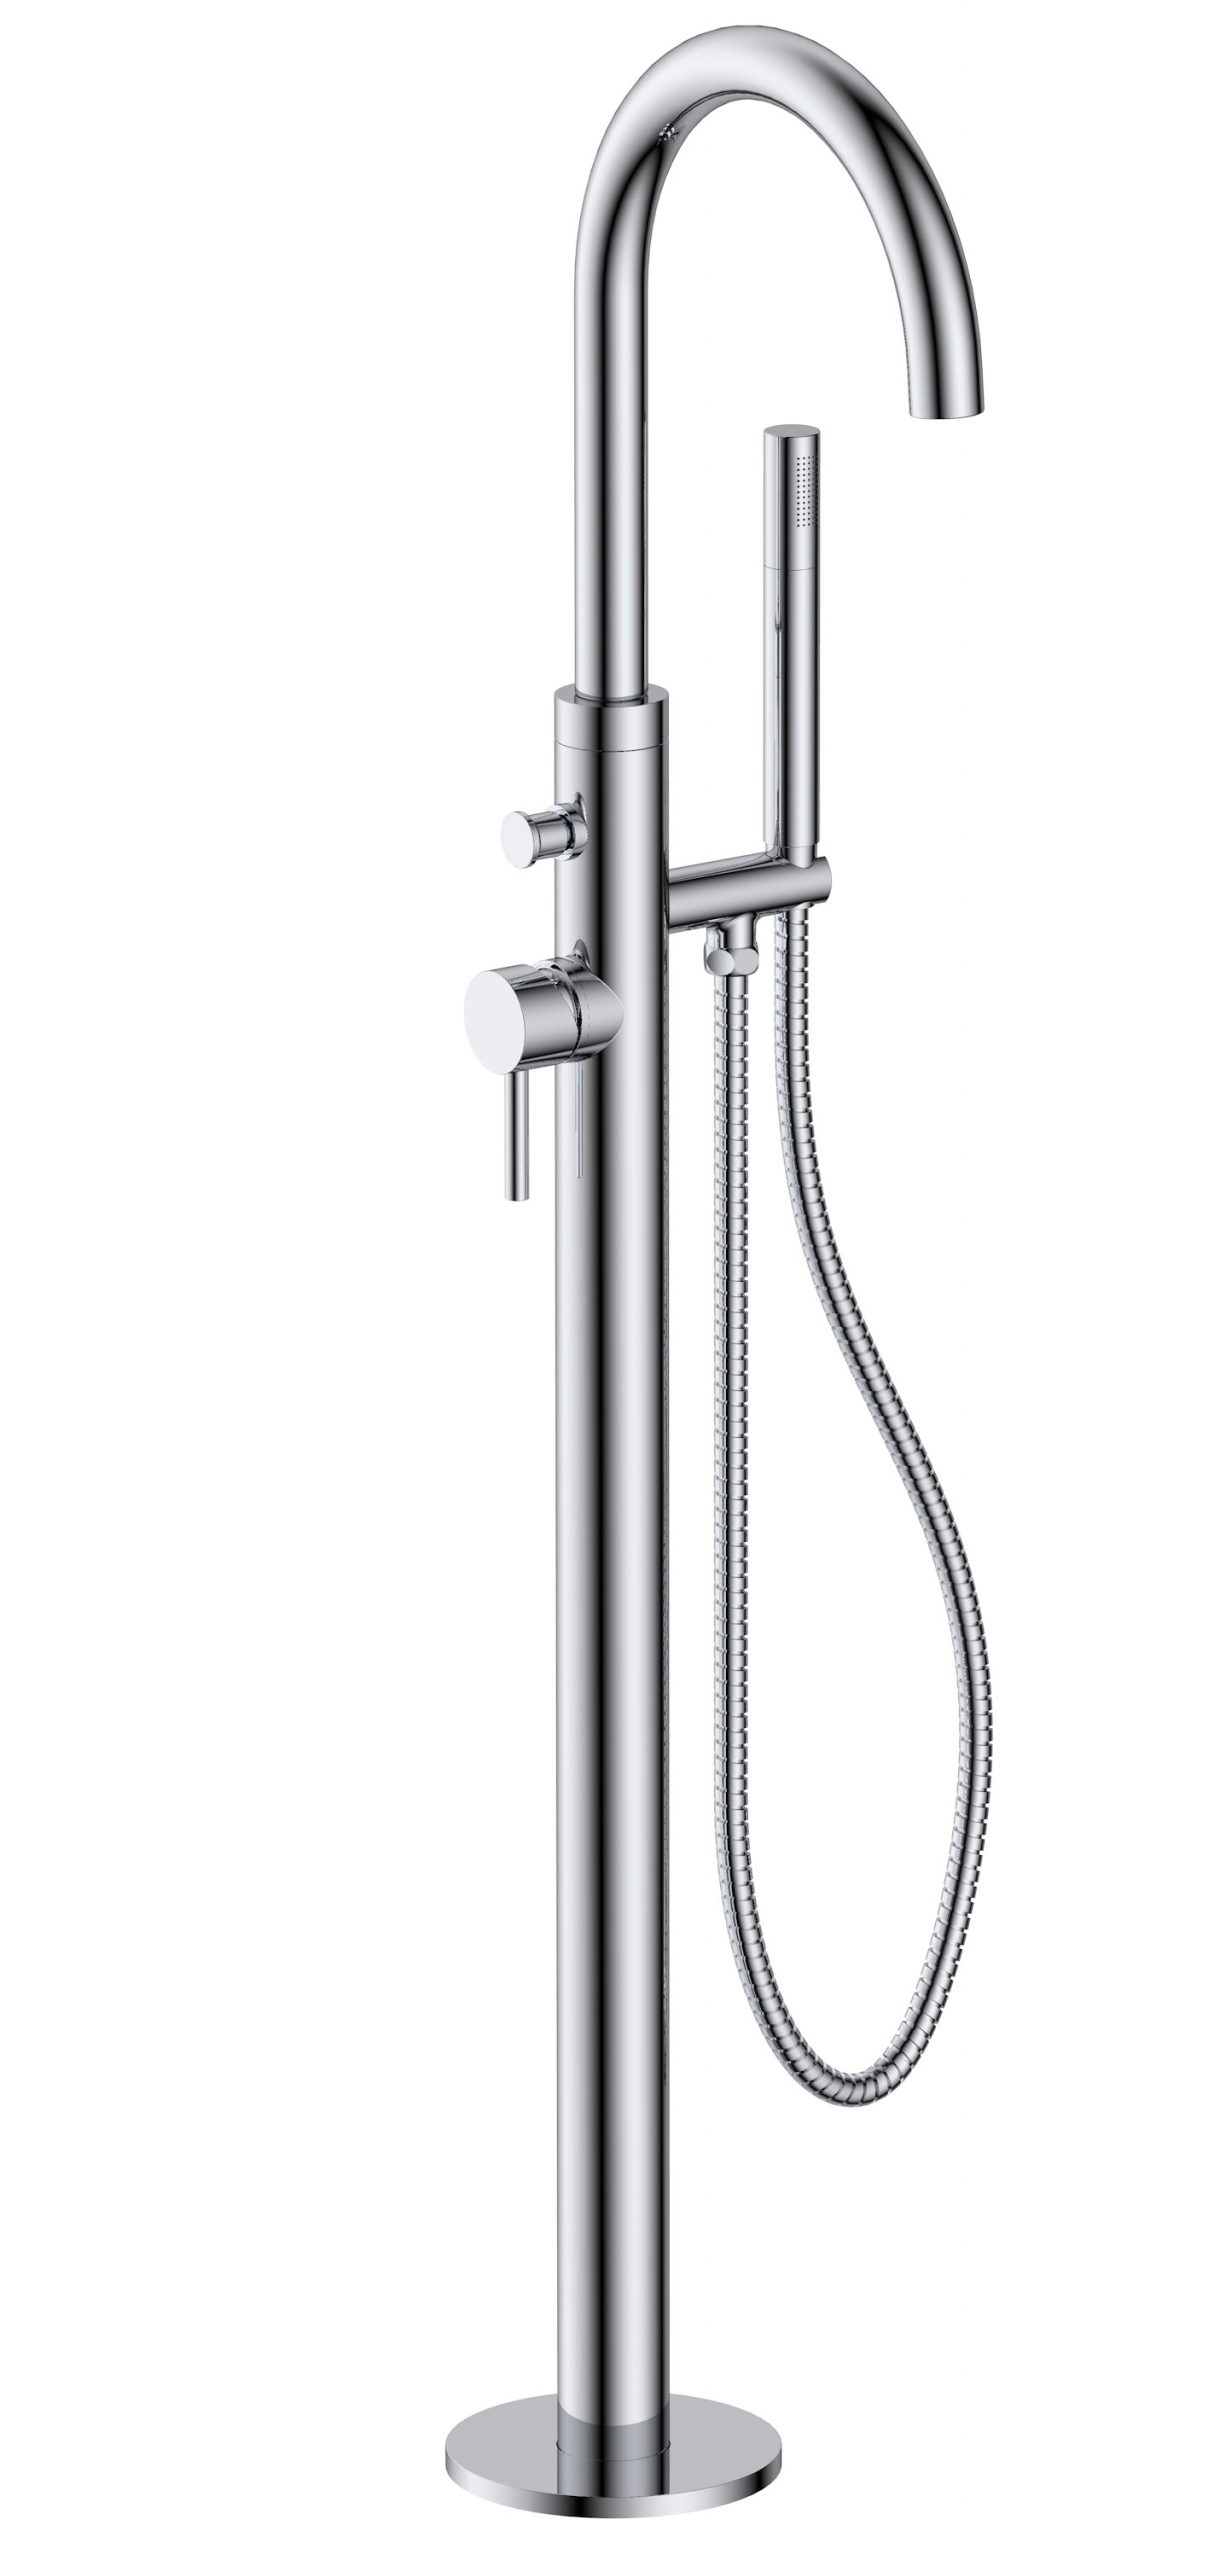 Florence floor standing, single lever bath shower mixer